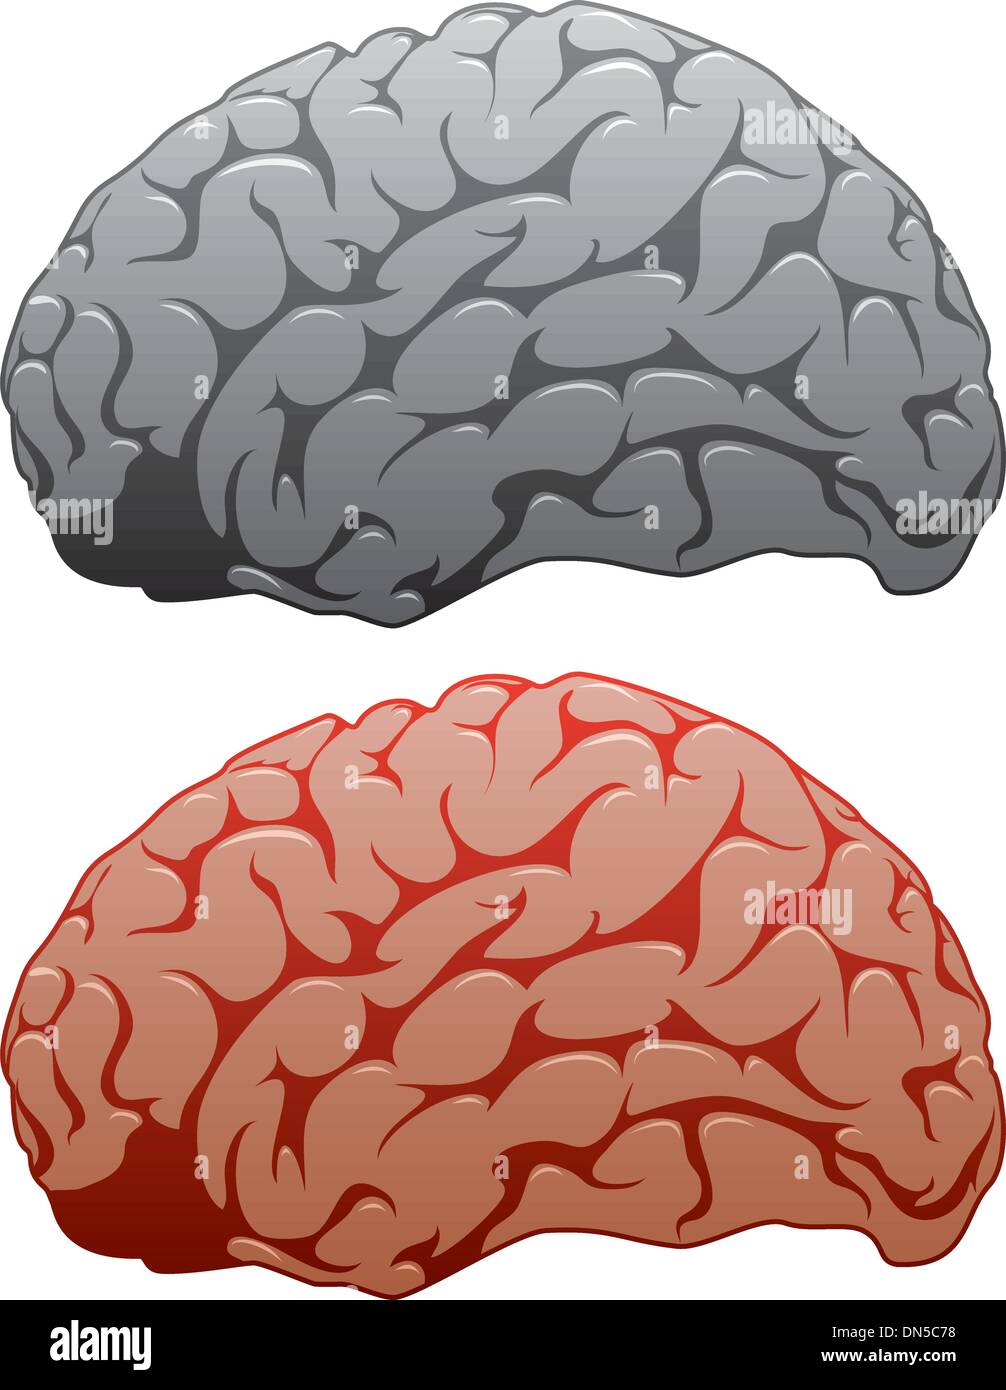 vector set of human brains Stock Vector